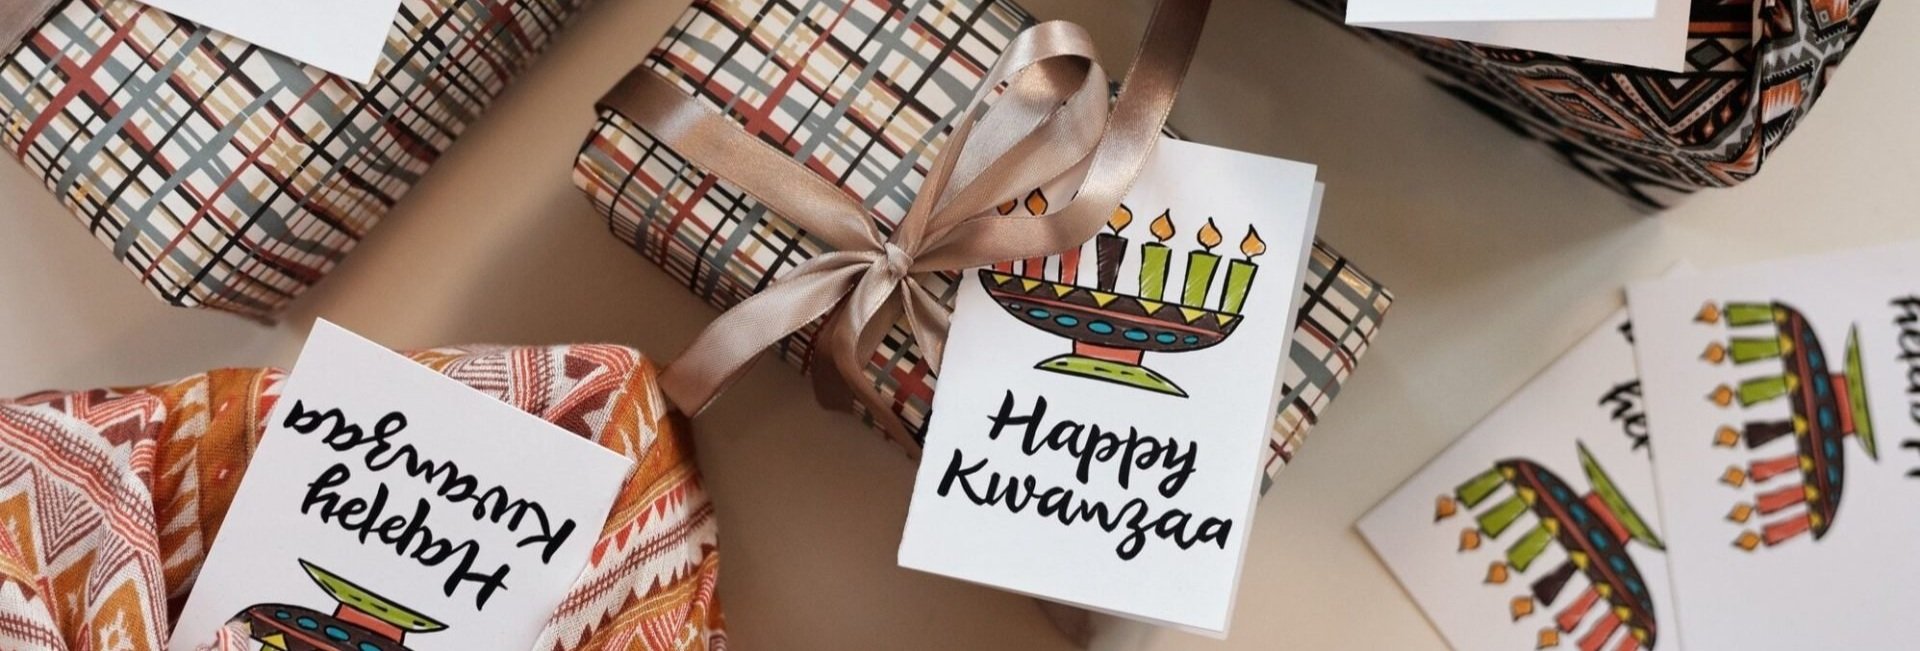 Kwanzaa Wrapping Paper